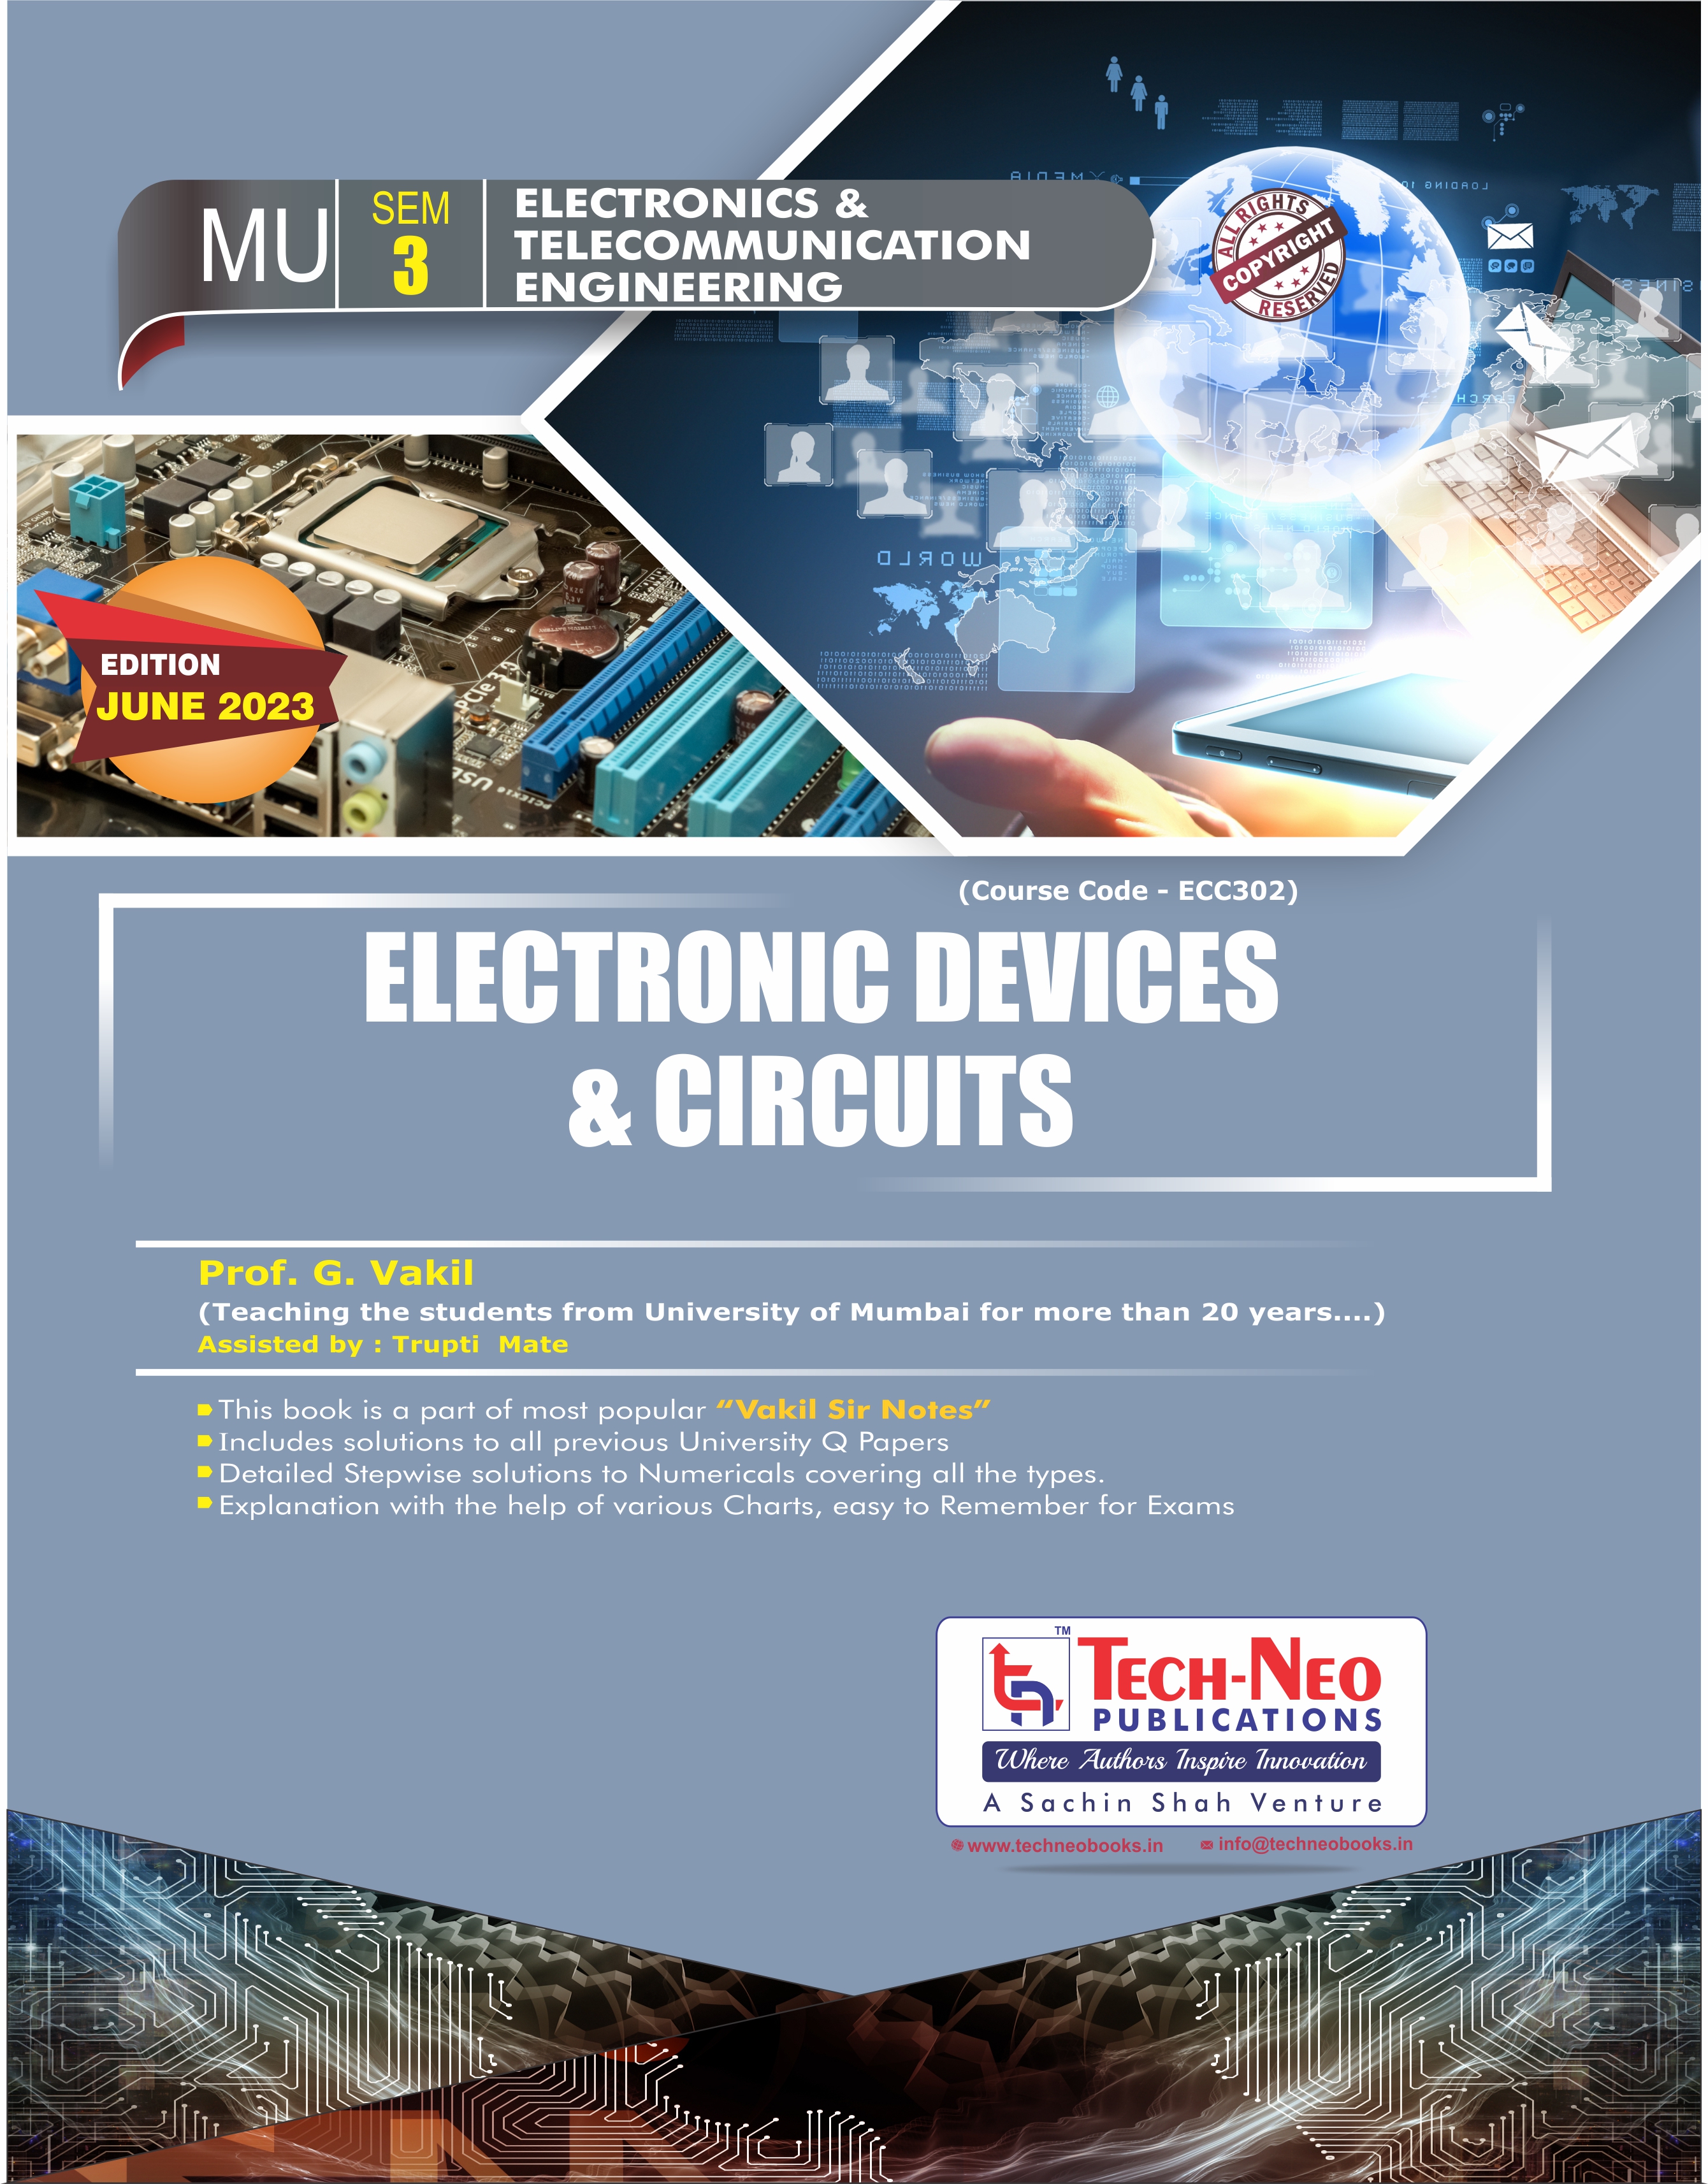 Electronic Devices & Circuits (ECC302)